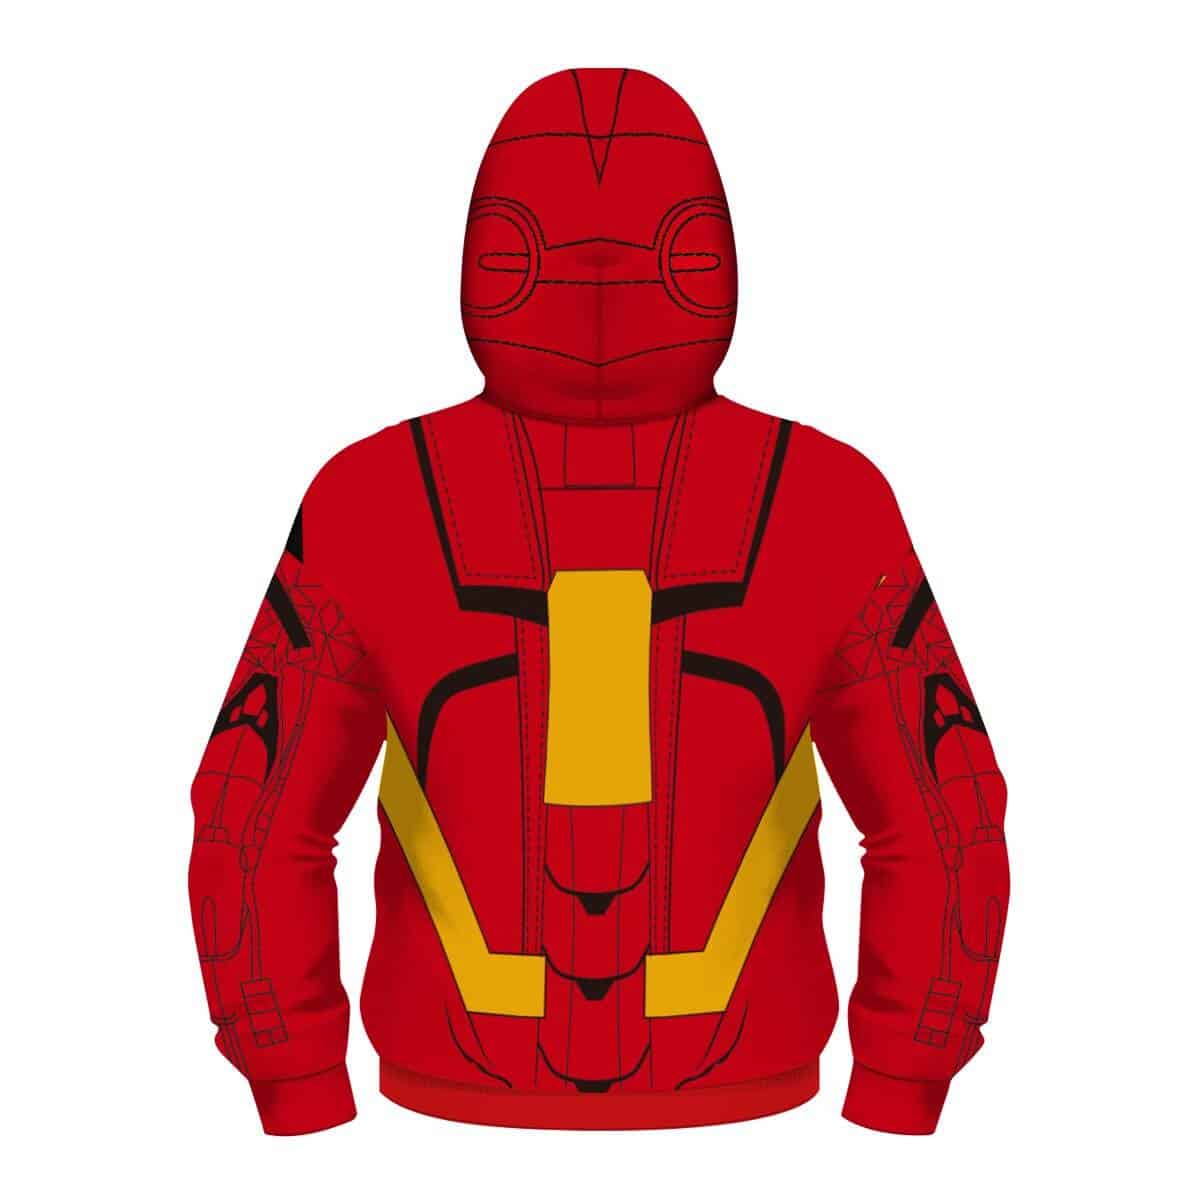 Fight Coronavirus Superhero Hooded Jacket with Mask (The Avengers, Captain America, Iron Man, Spiderman, Star Wars)